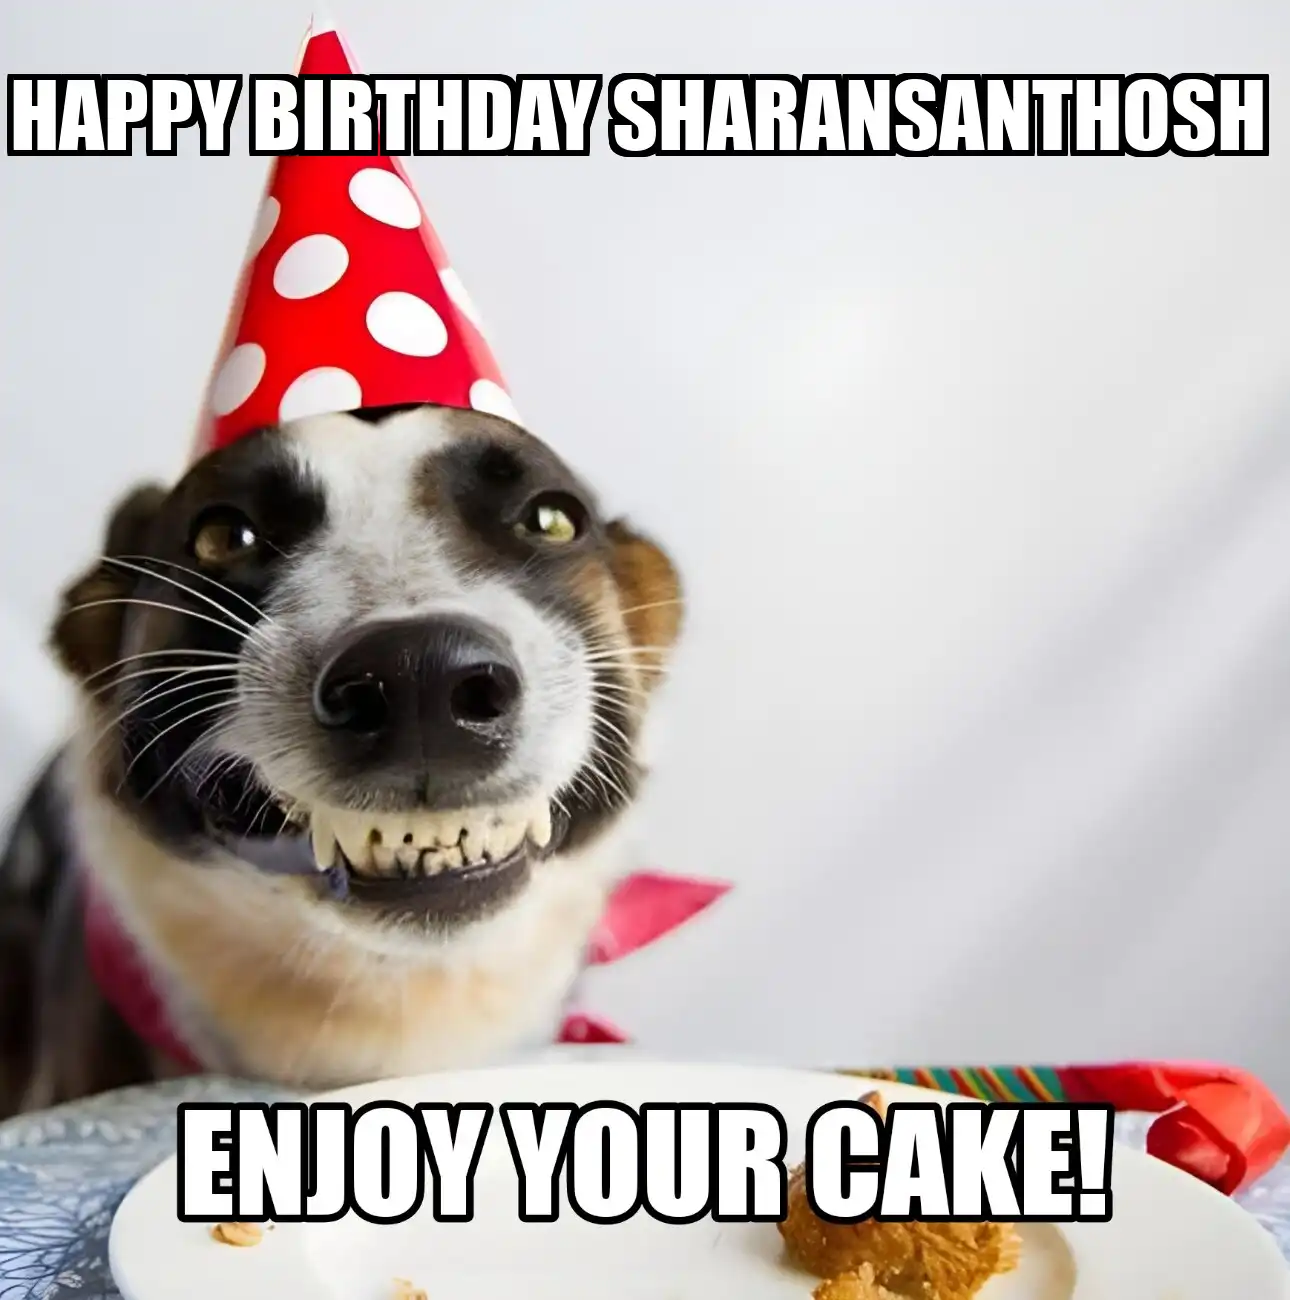 Happy Birthday Sharansanthosh Enjoy Your Cake Dog Meme